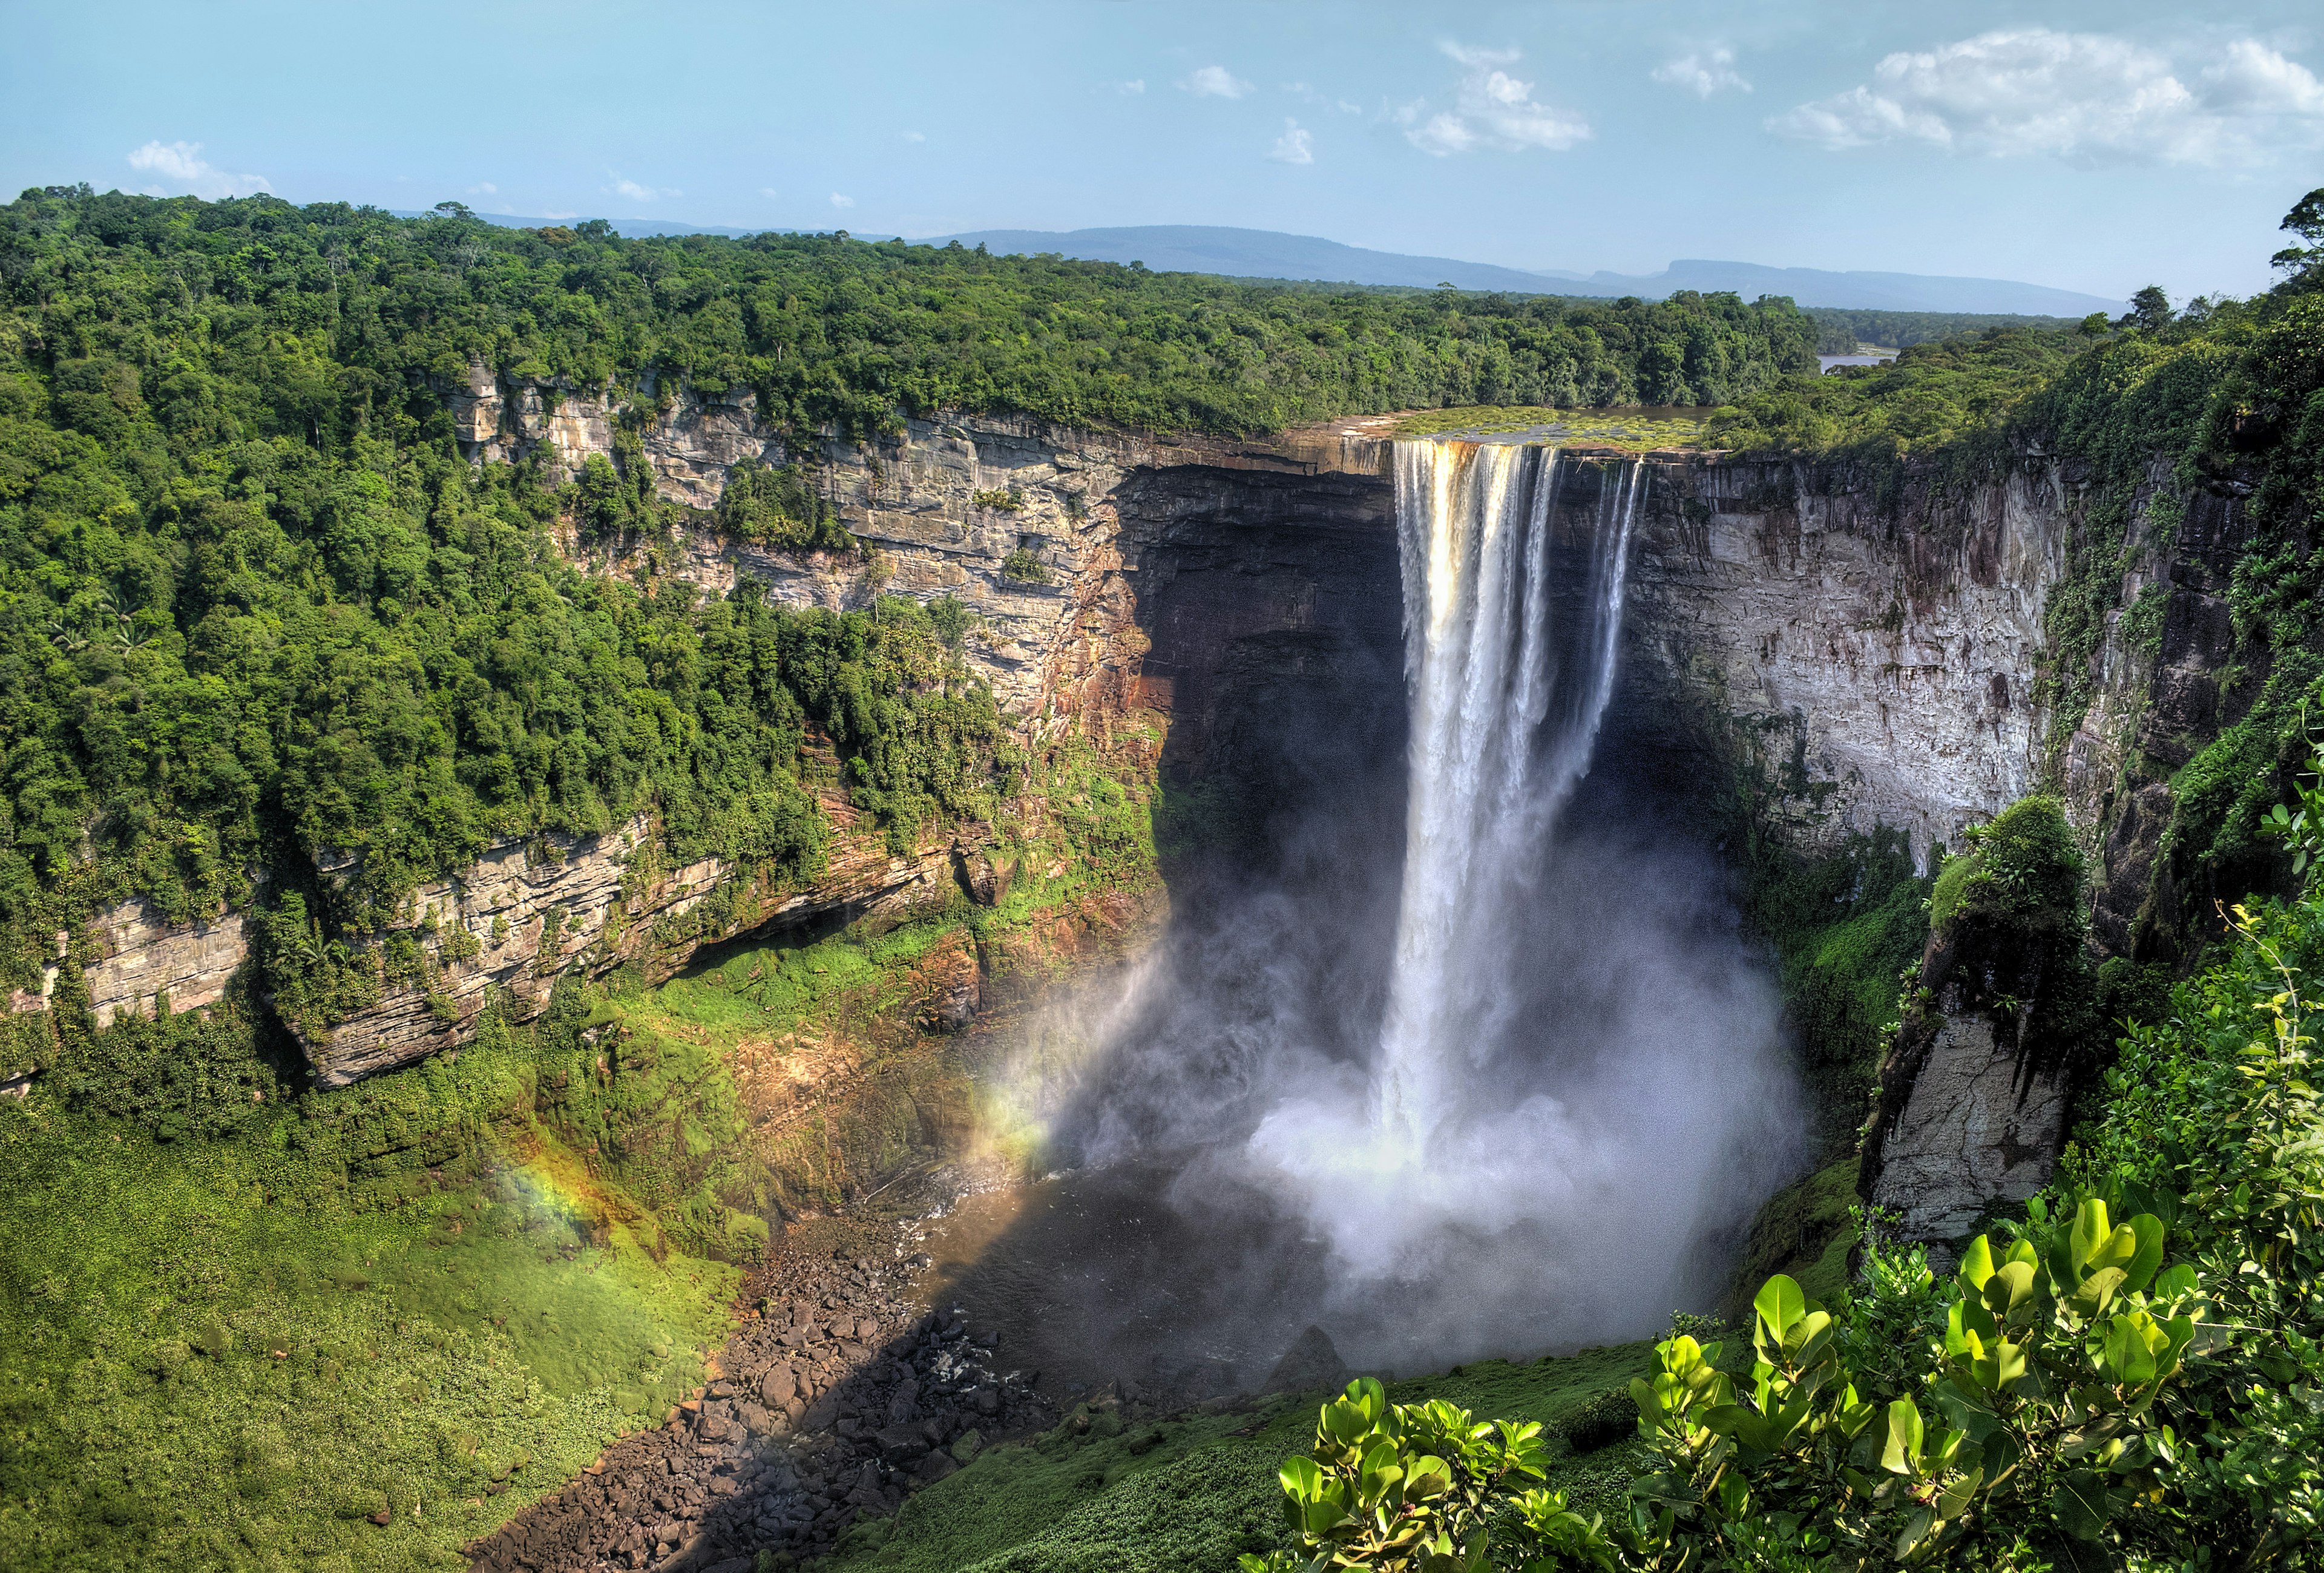 The spectacular Kaieteur Falls in Guyana.